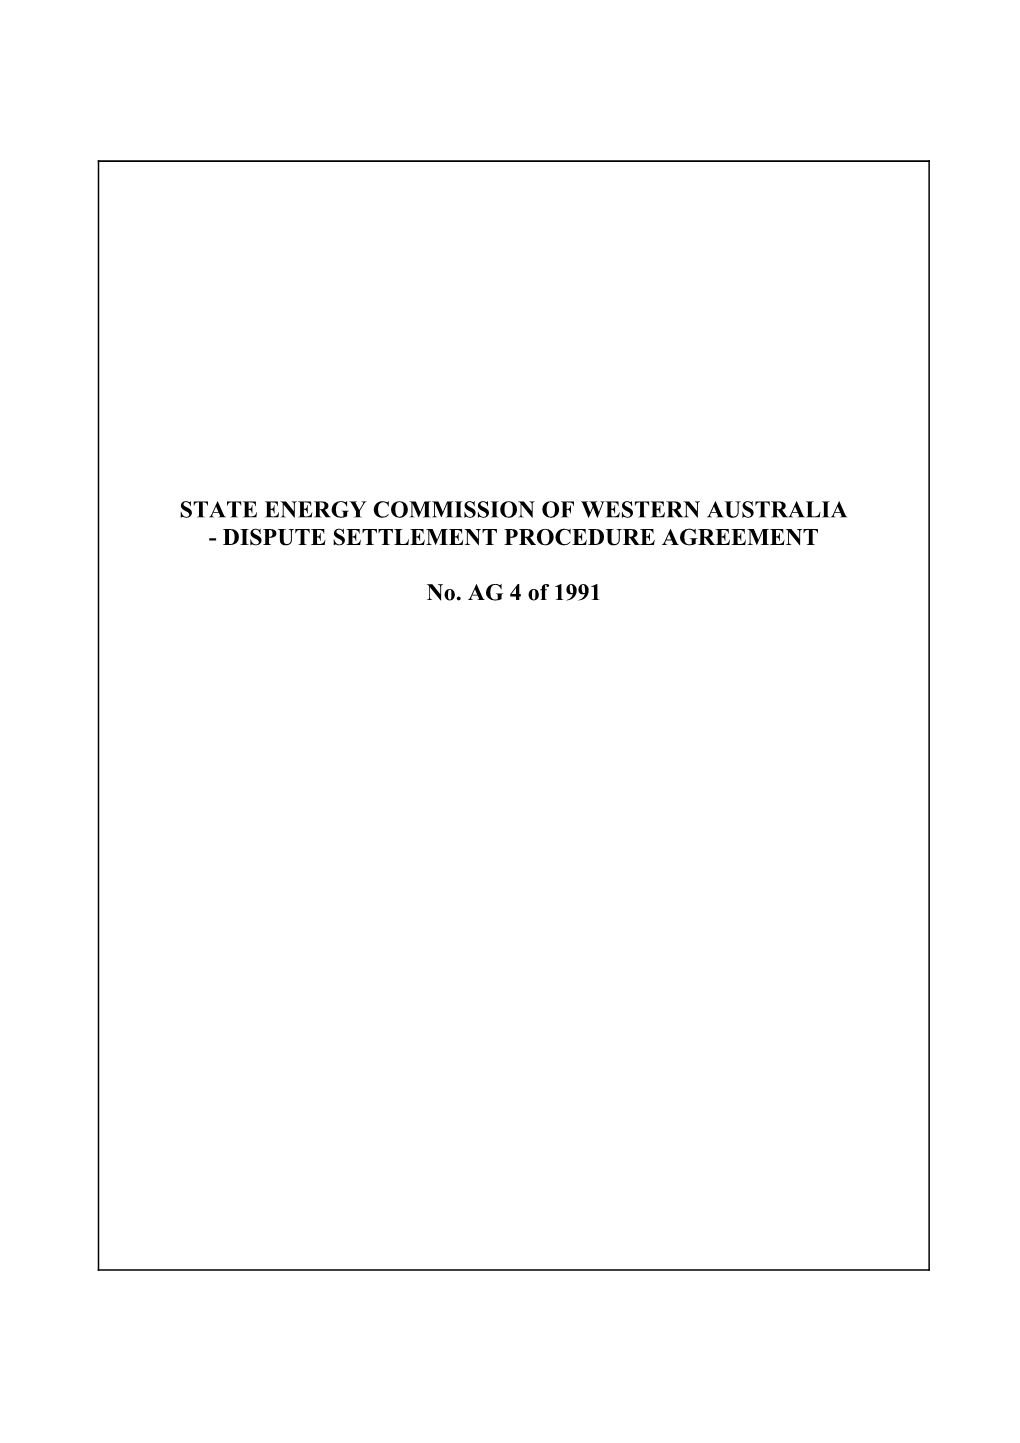 State Energy Commission of Western Australia - Dispute Settlement Procedure Agreement